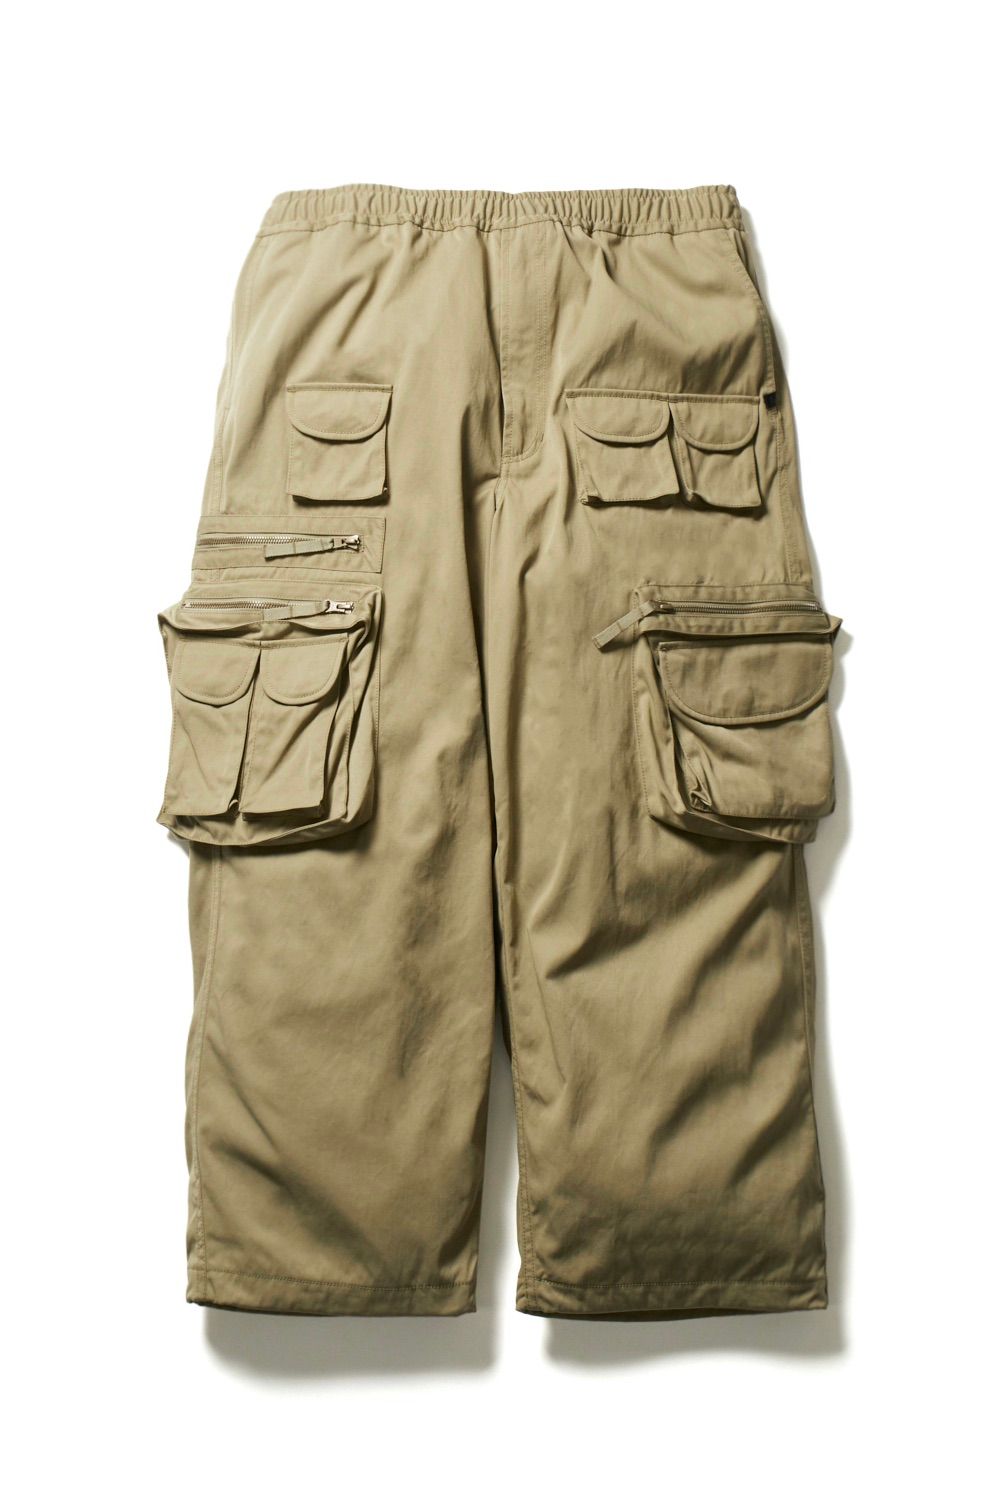 DAIWA PIER39 - tech perfect fishing pants -beige- 22aw men 8月27日 